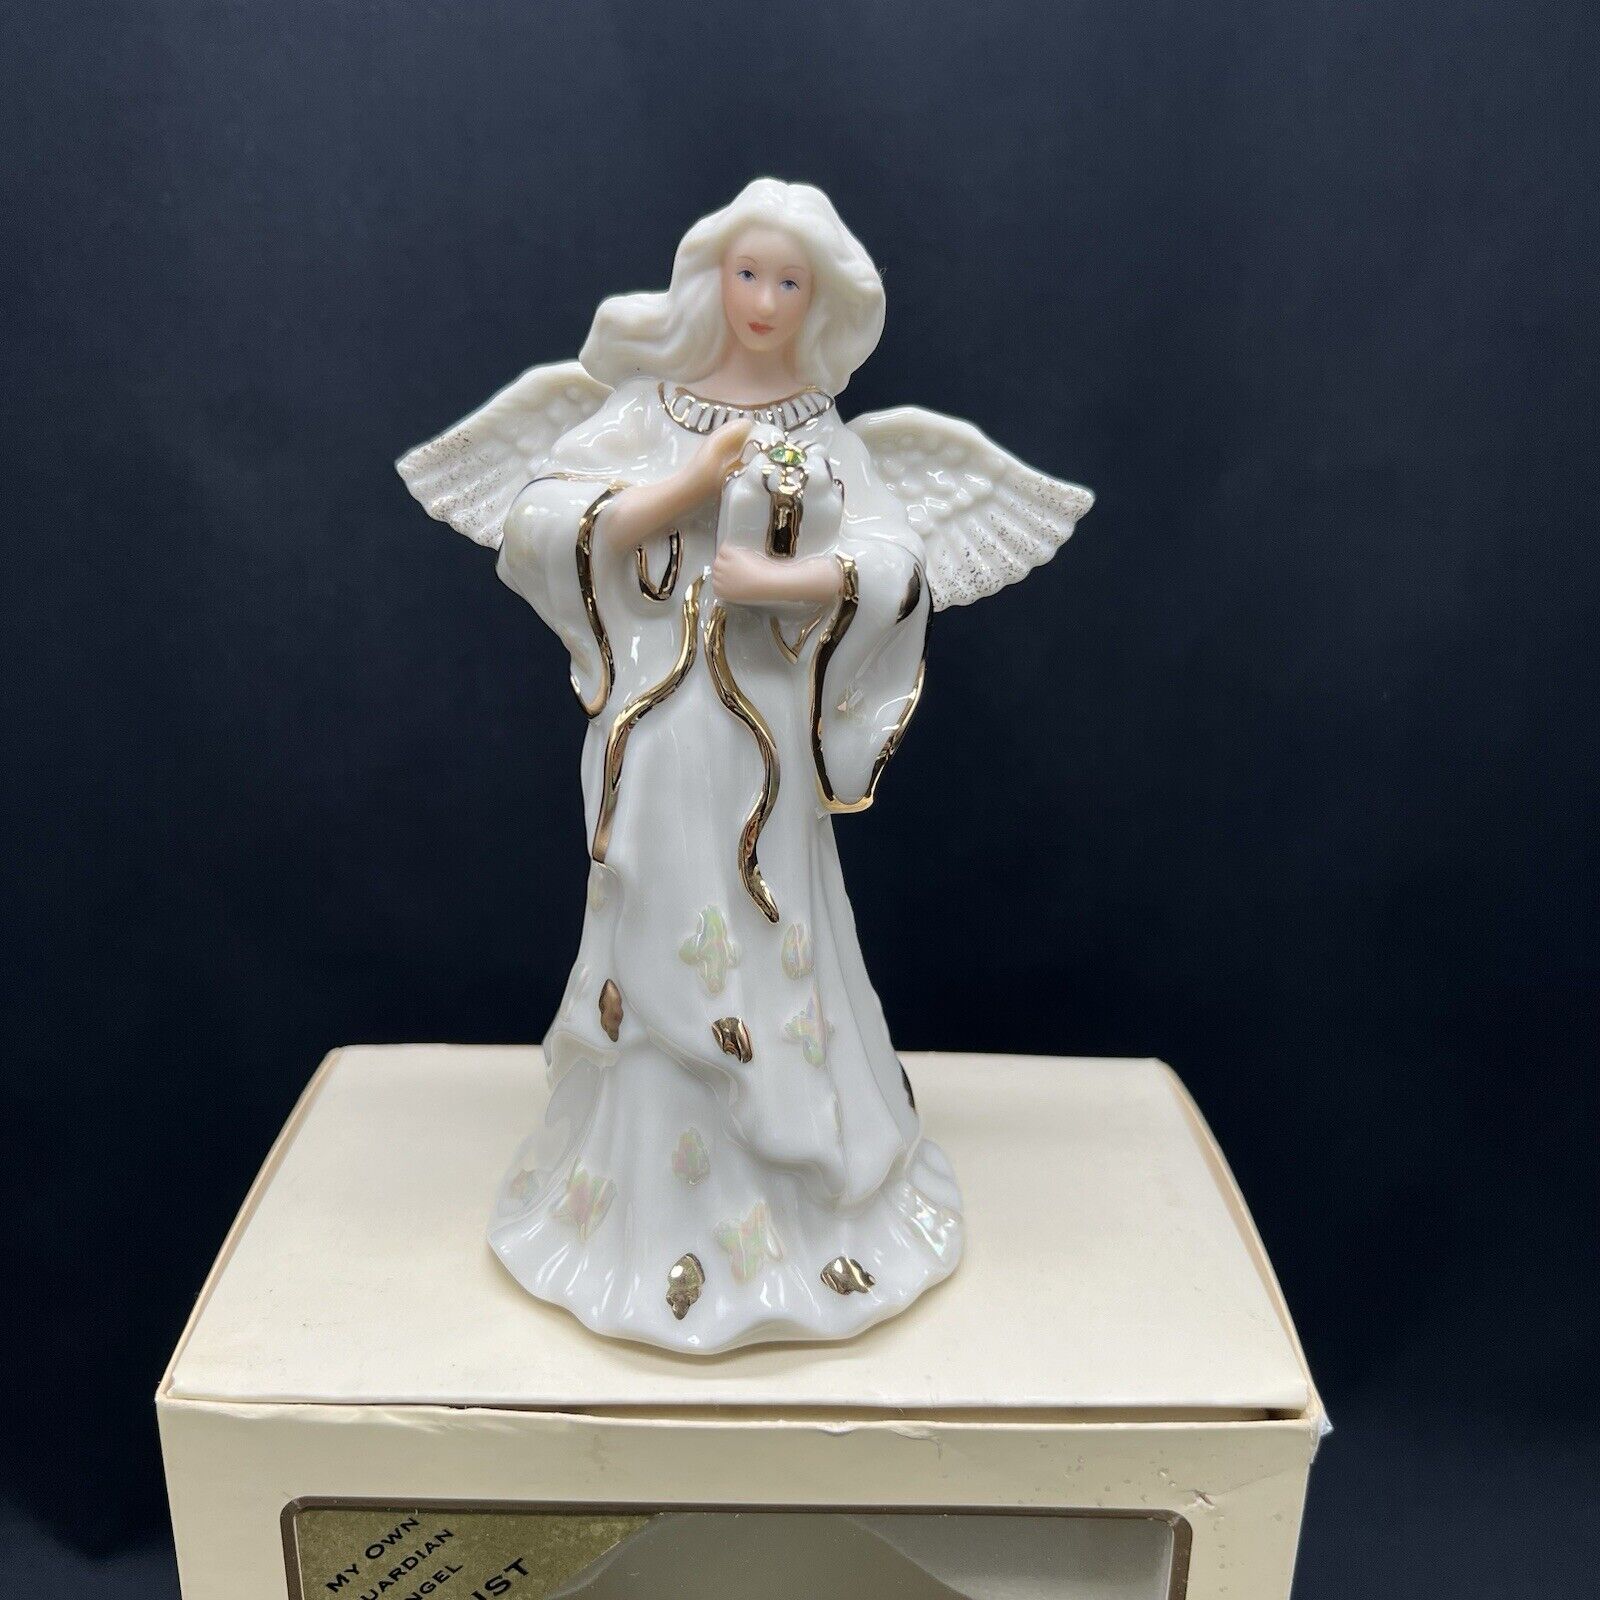 Lenox “My Own Guardian Angel” AUGUST Birthday Figurine #790592